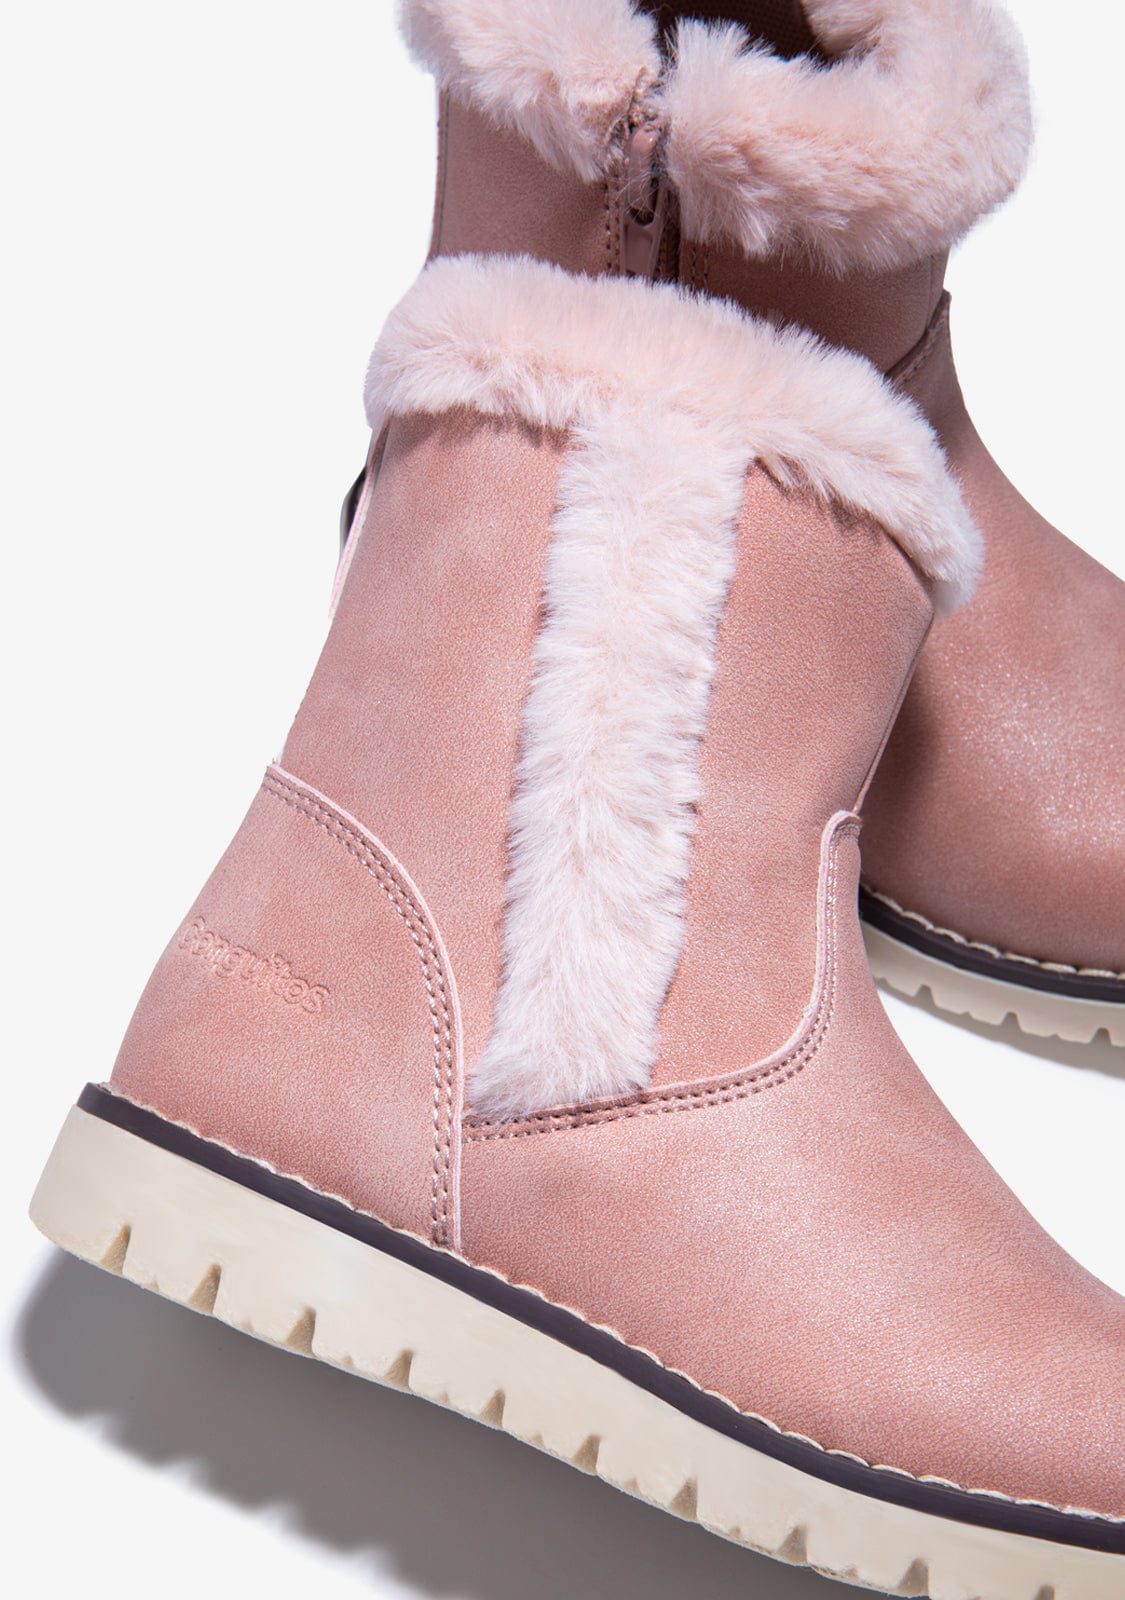 CONGUITOS Shoes Girl's Pink Fur Boots Napa